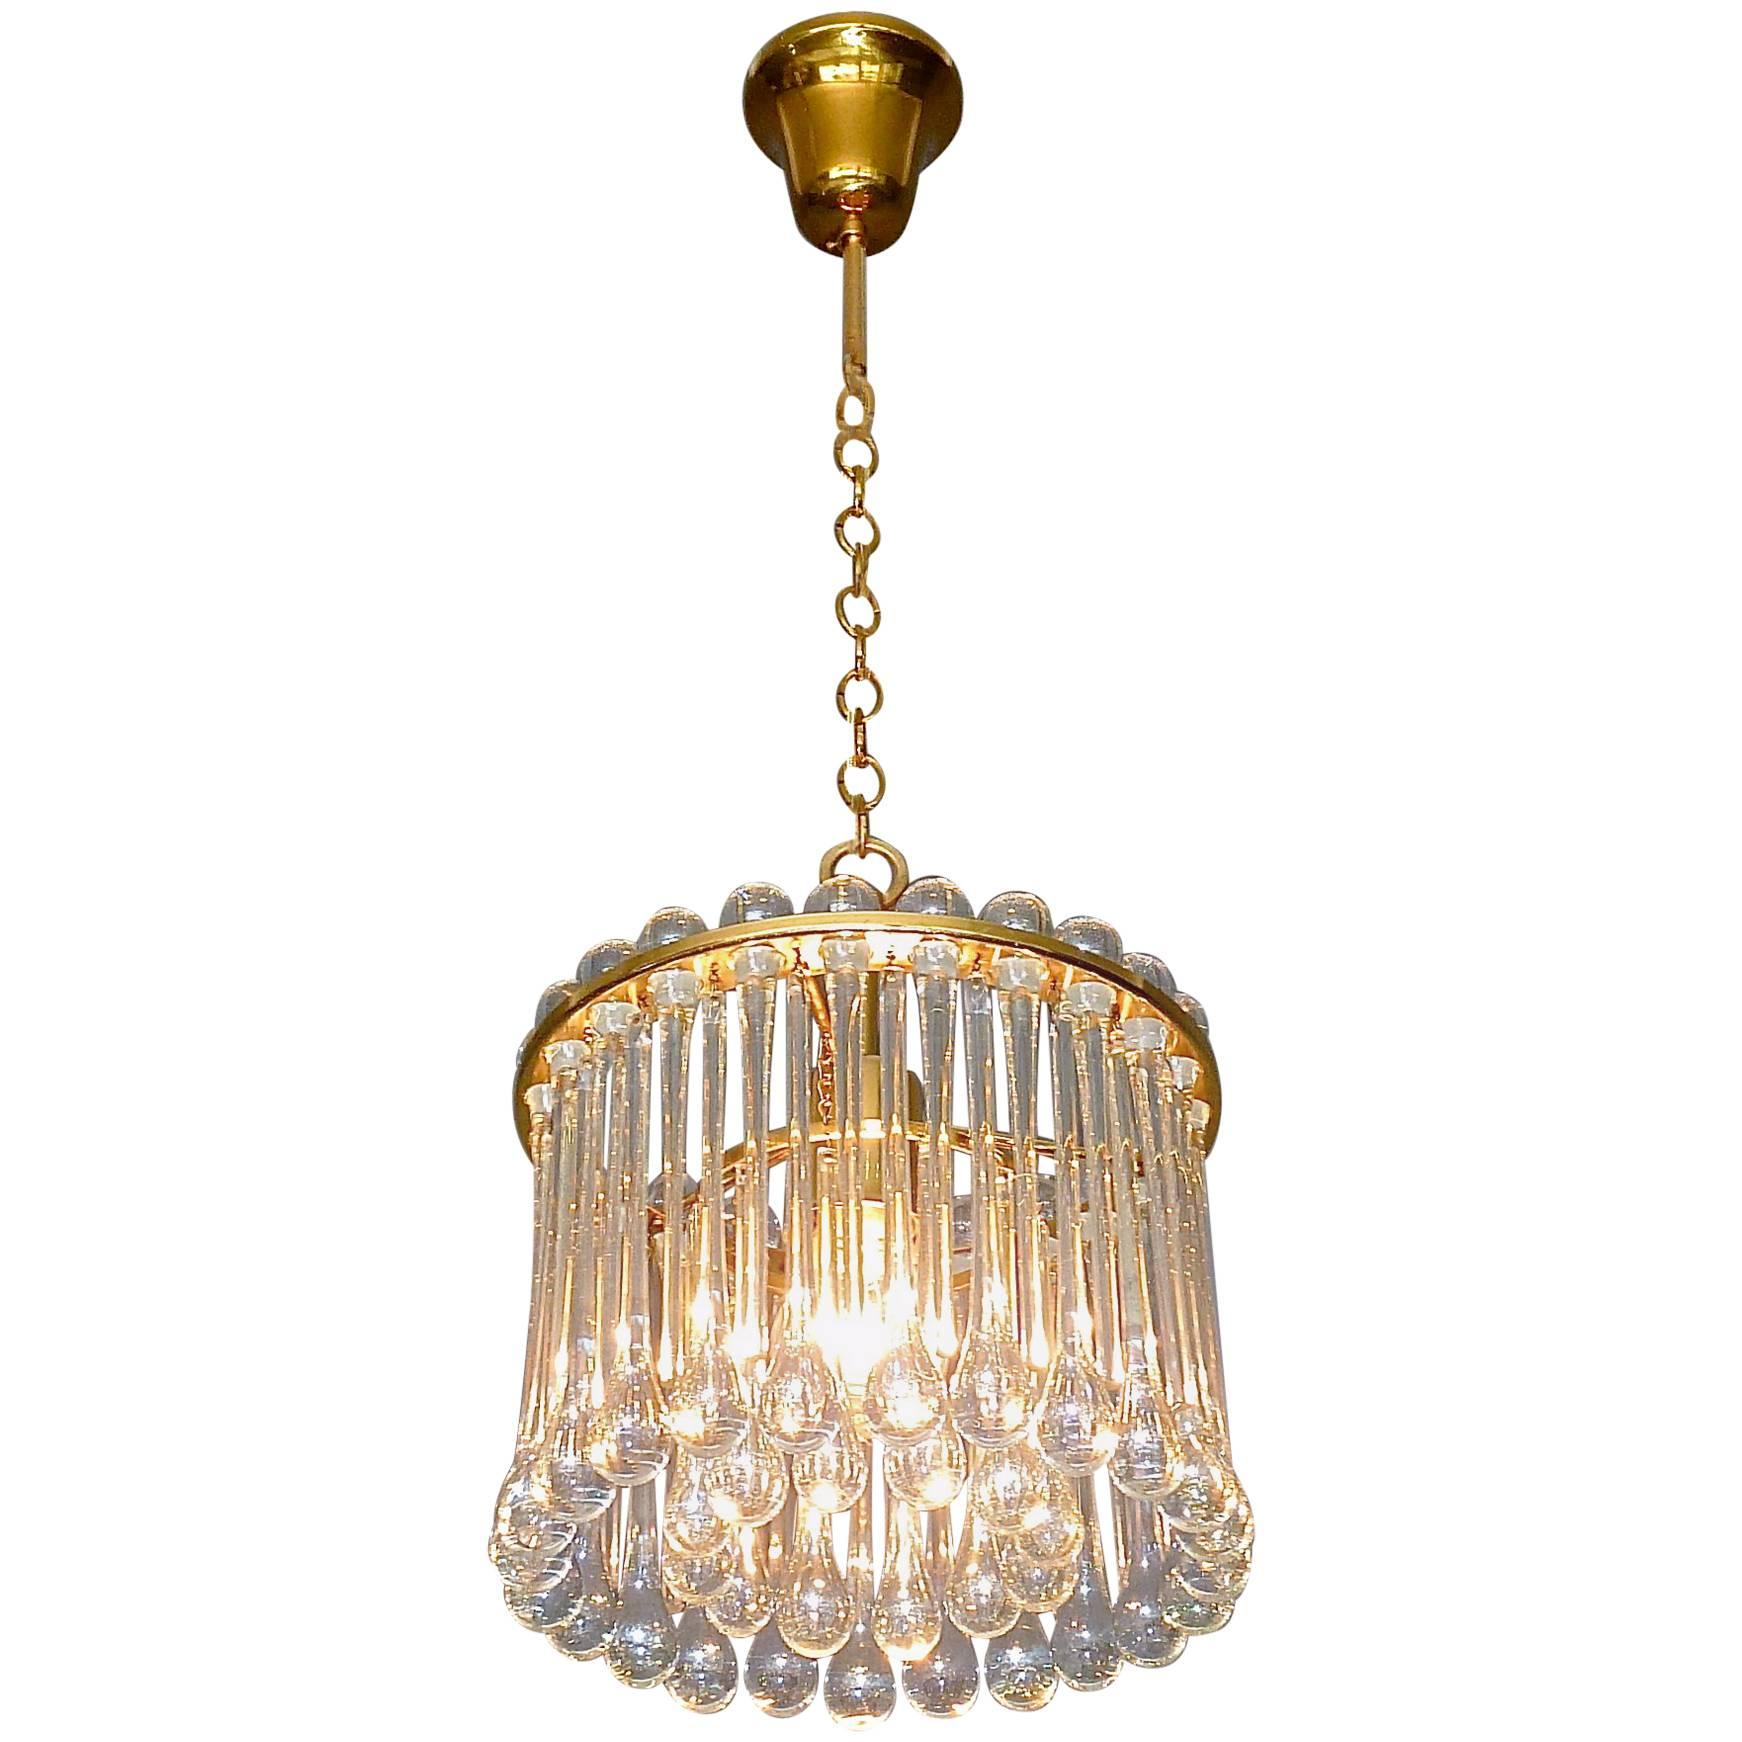 Signierter Palwa-Kronleuchter, vergoldetes Messing, Murano-Kristallglas-Tropfen, Venini-Stil, 1960er Jahre